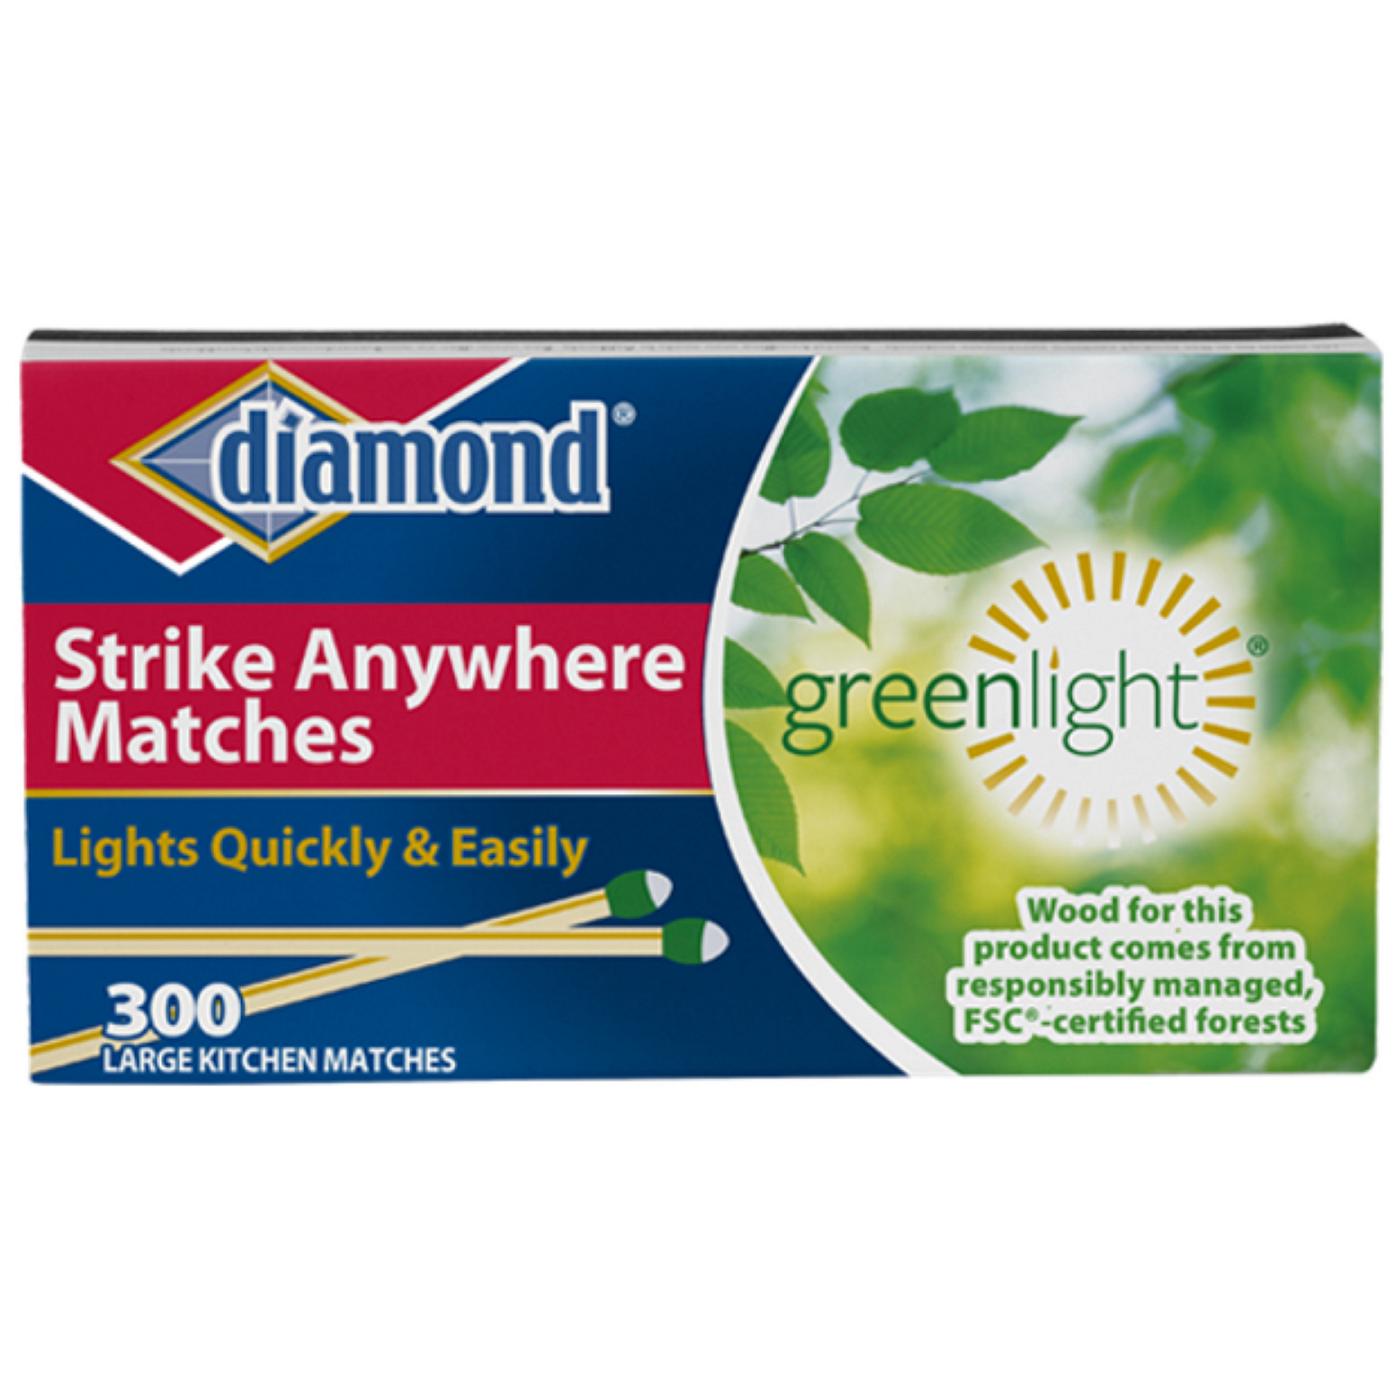 Diamond Greenlight Strike On Box Large Kitchen Matches; image 1 of 2